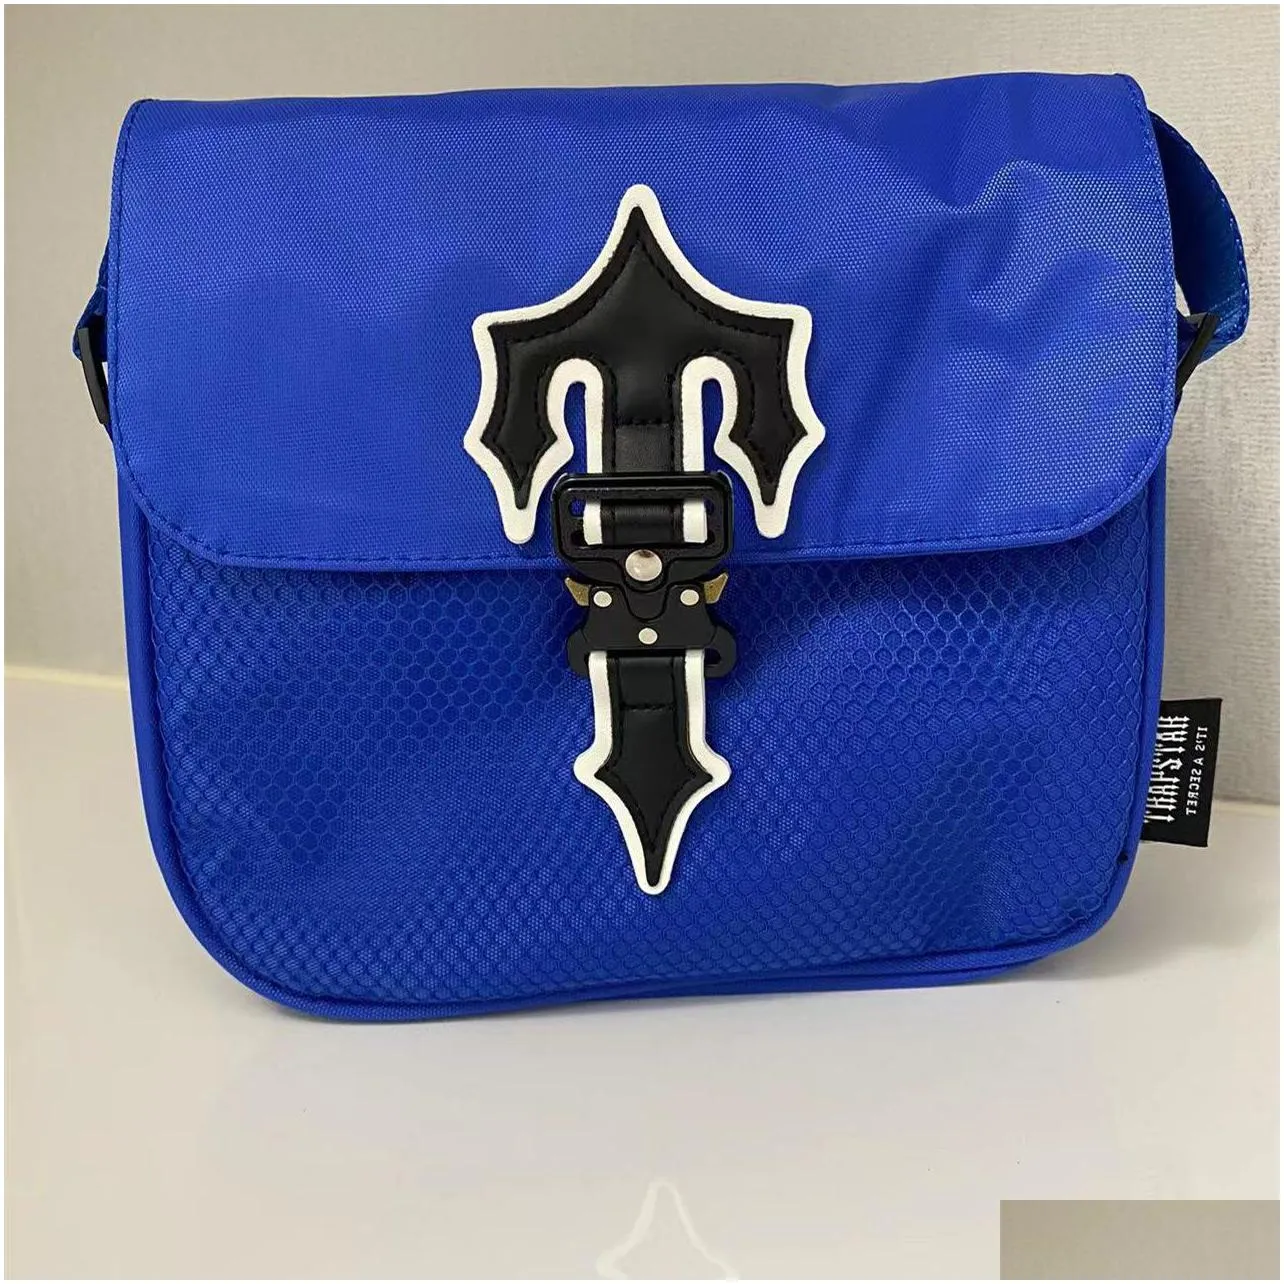 trapstar luxury designer bag irongate t crossbody bag uk london fashion handbag waterproof bags